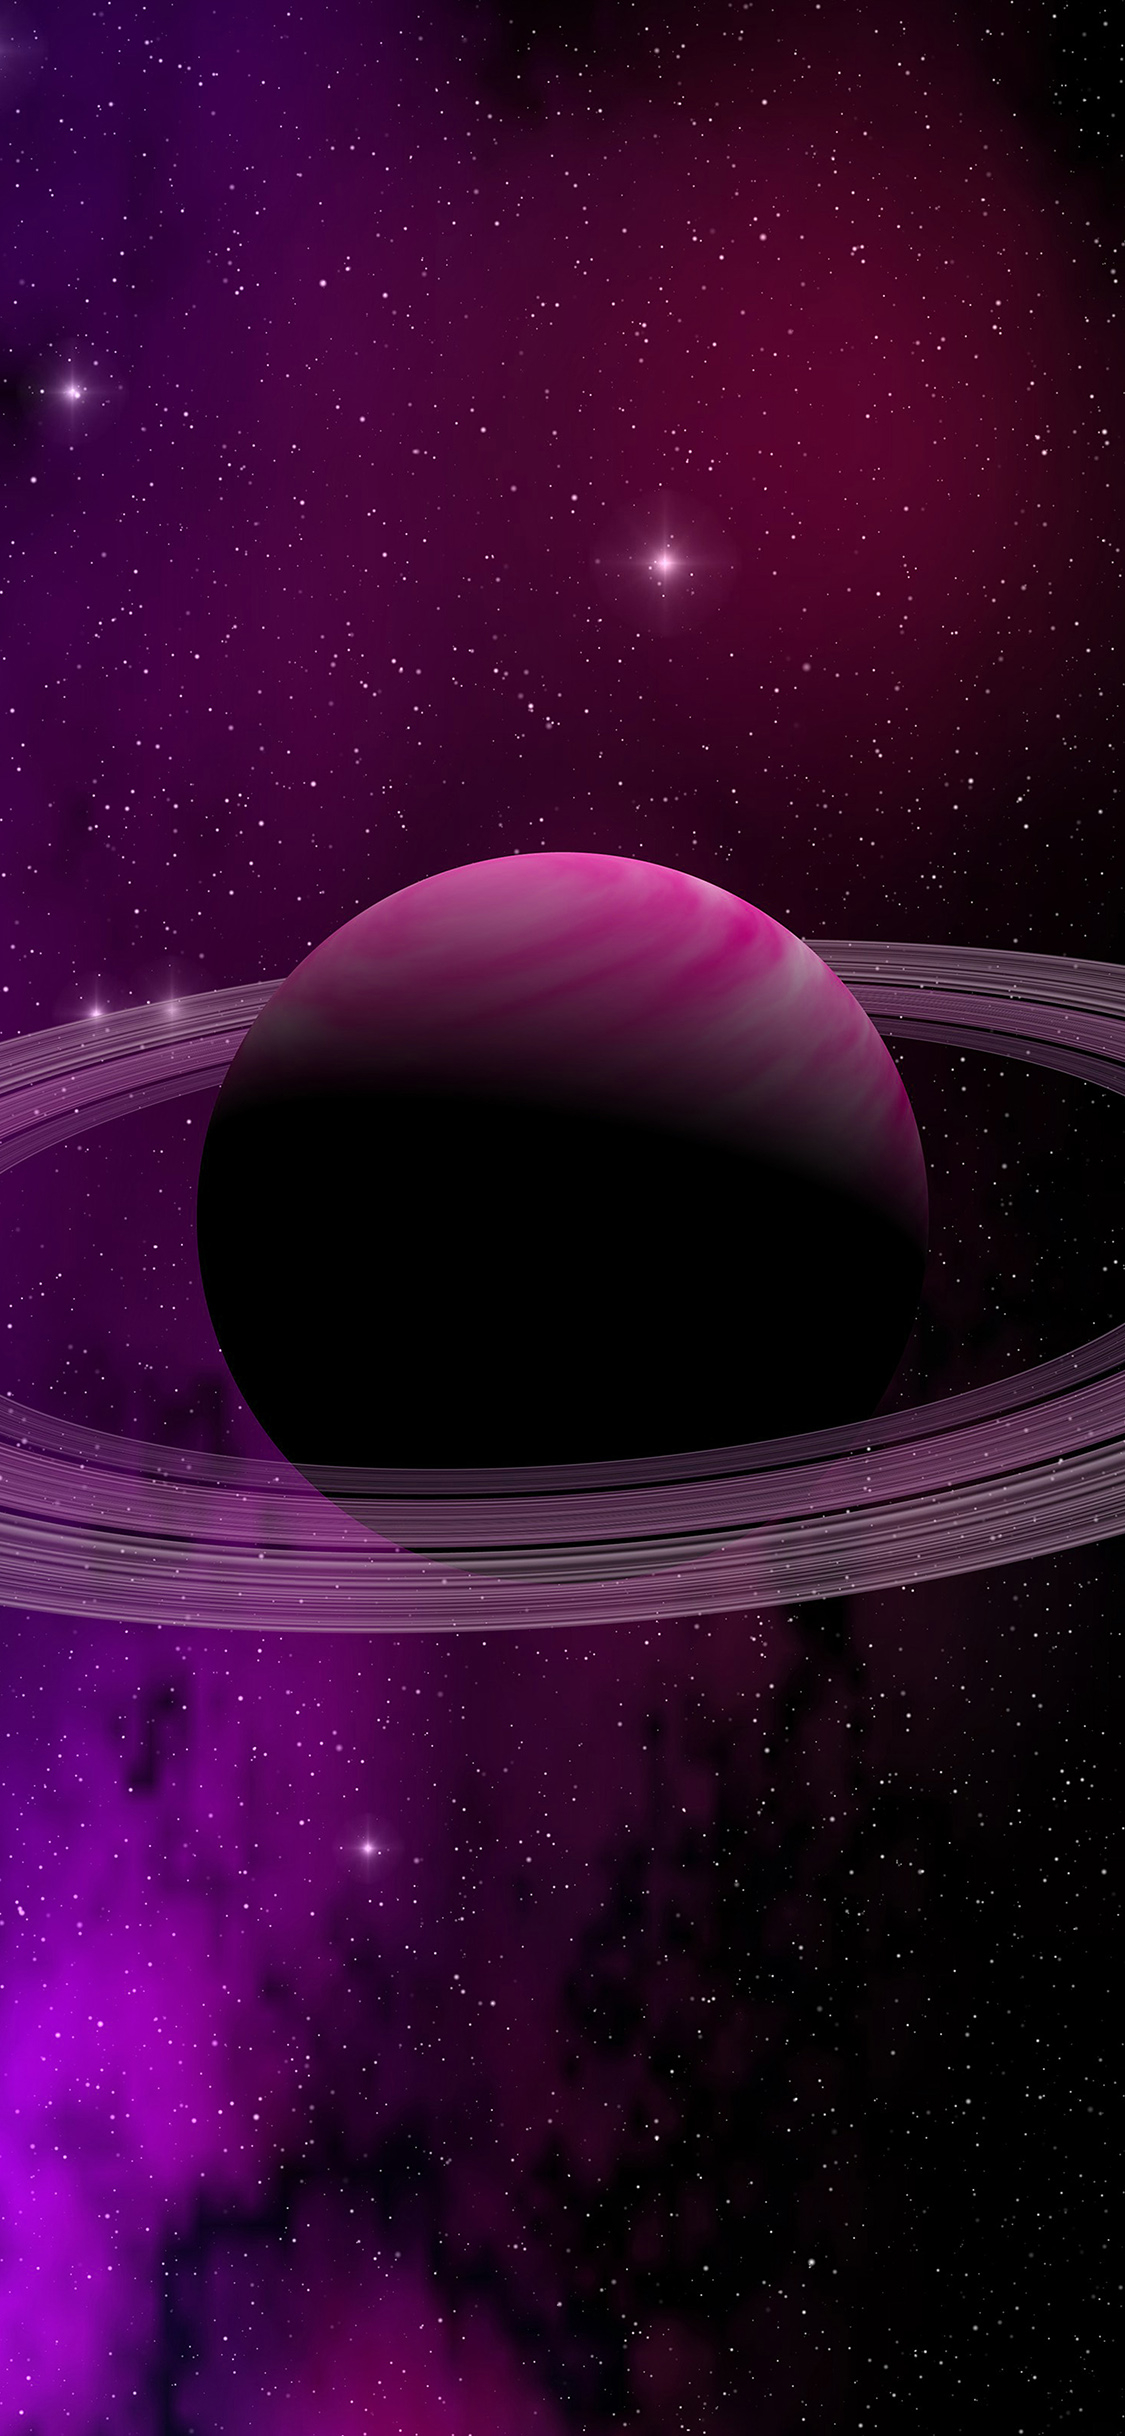 1125x2436 | iPhone11 wallpaper | at80-space-planet-saturnstar-art-illustration-purple